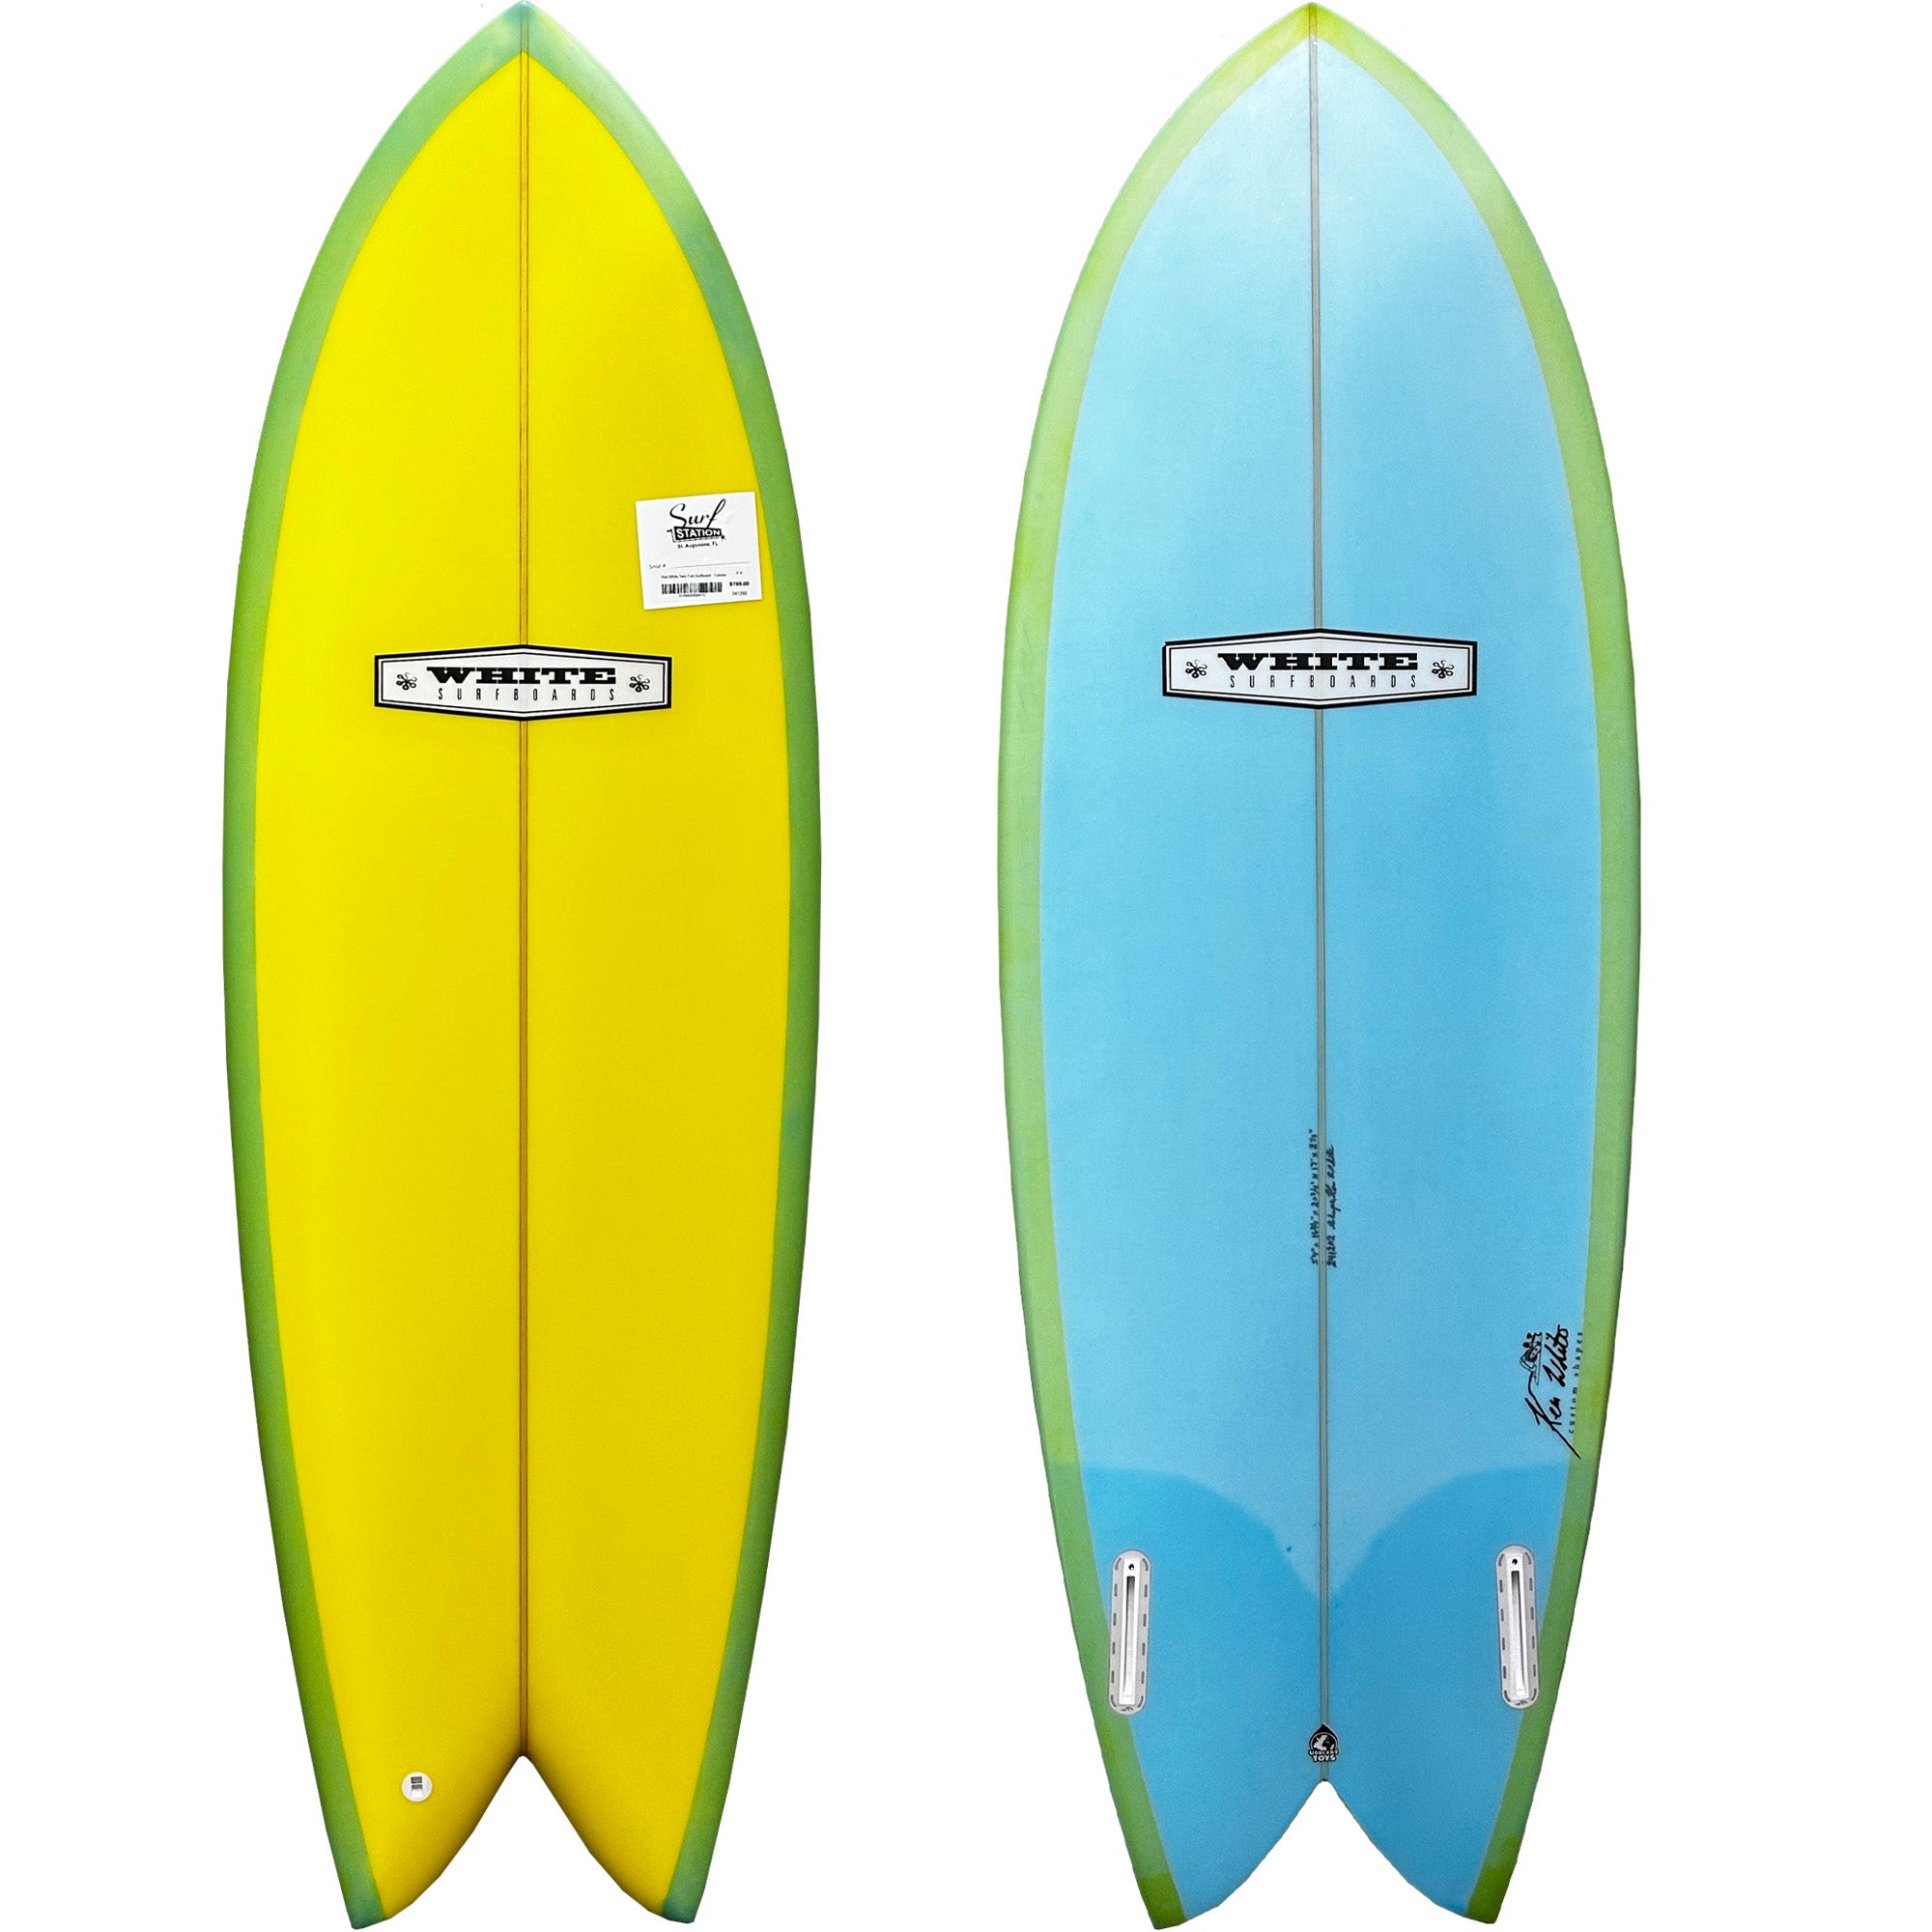 Ken White Twin Fish Surfboard - Futures